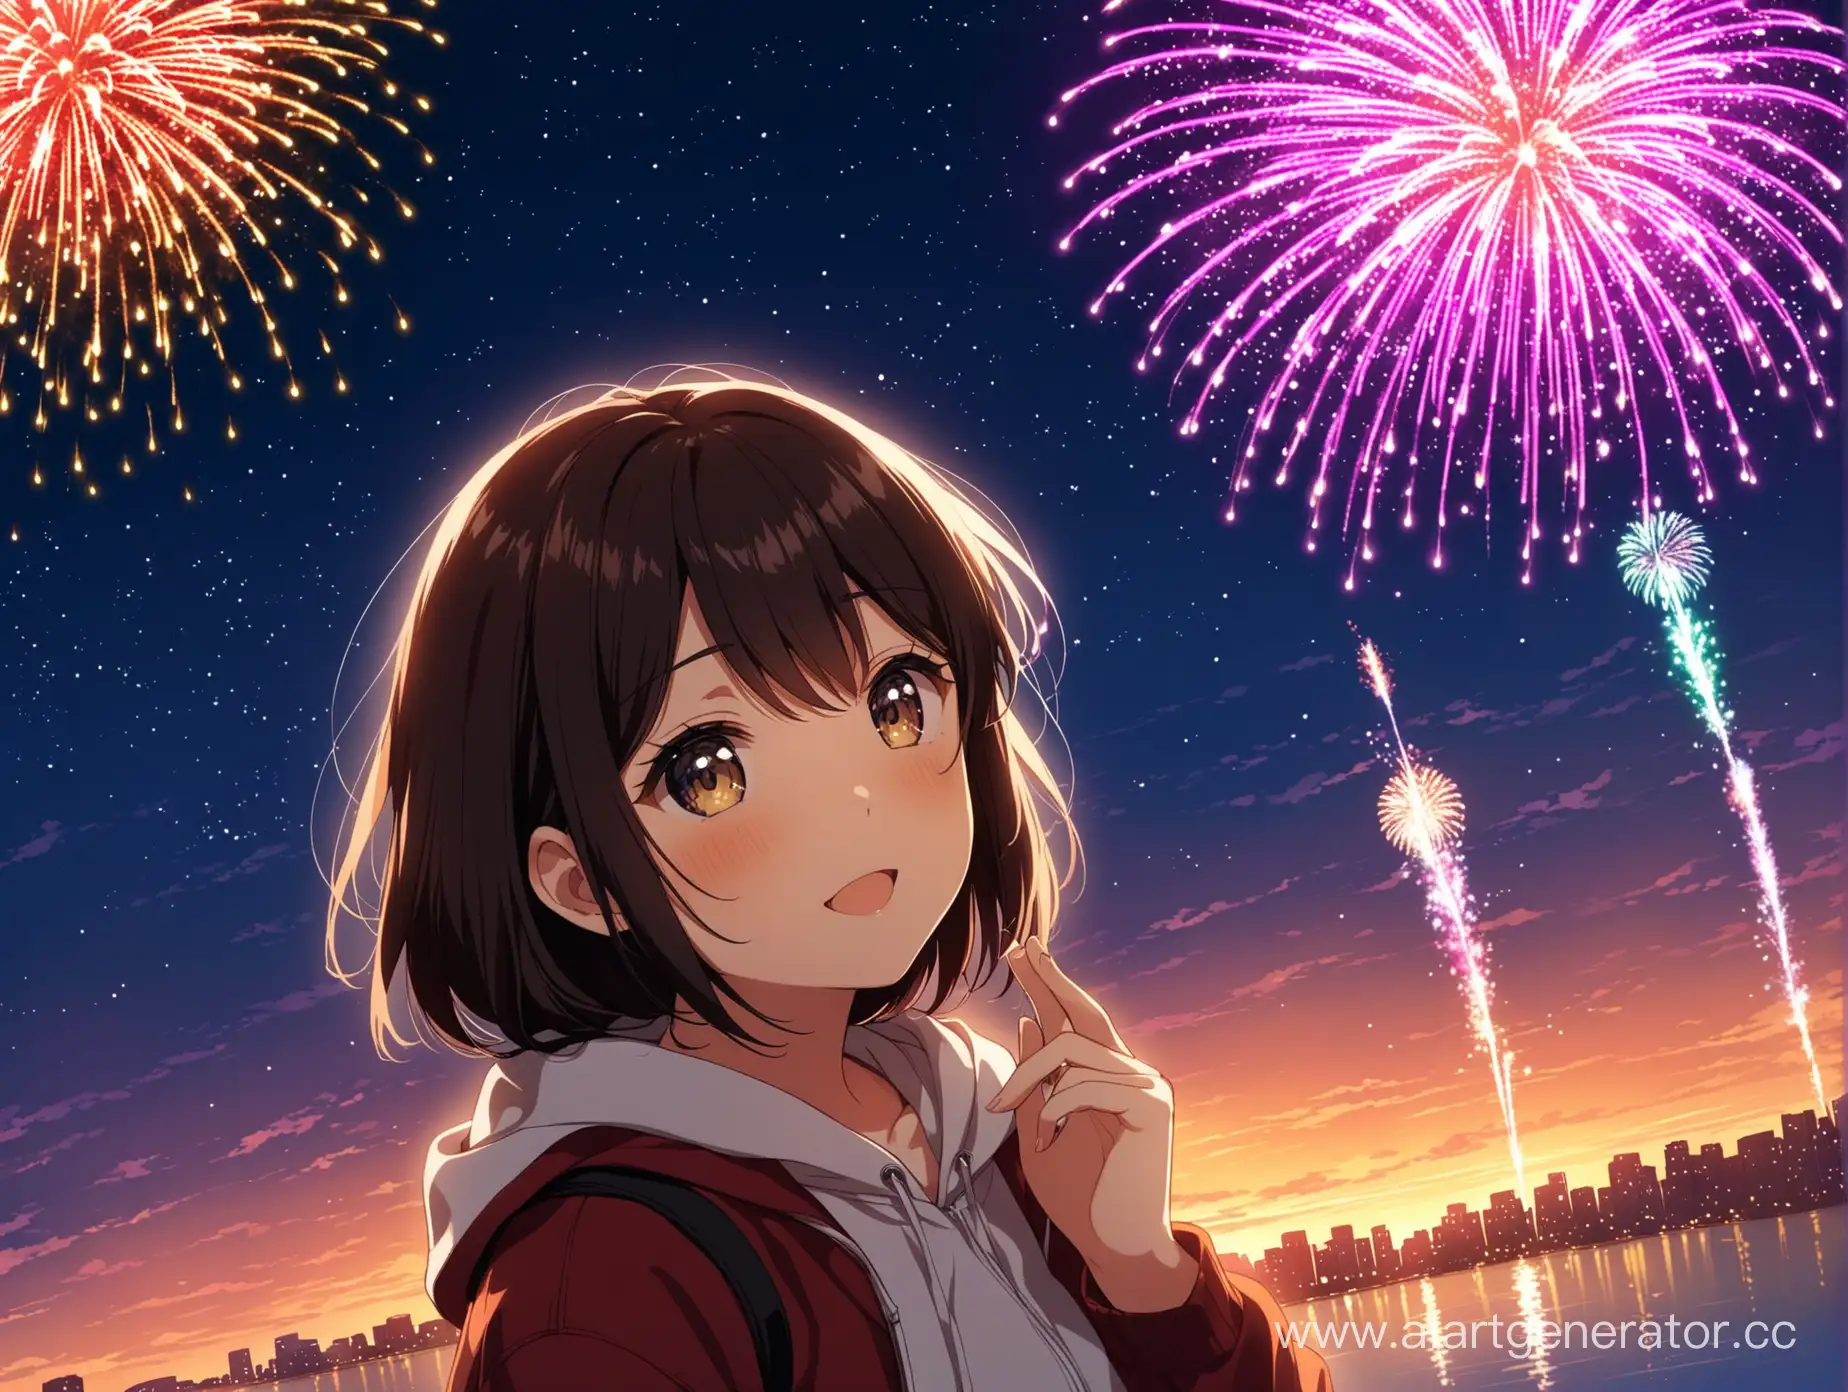 Anime-Girl-Watching-Fireworks-Capturing-the-Nights-Magic